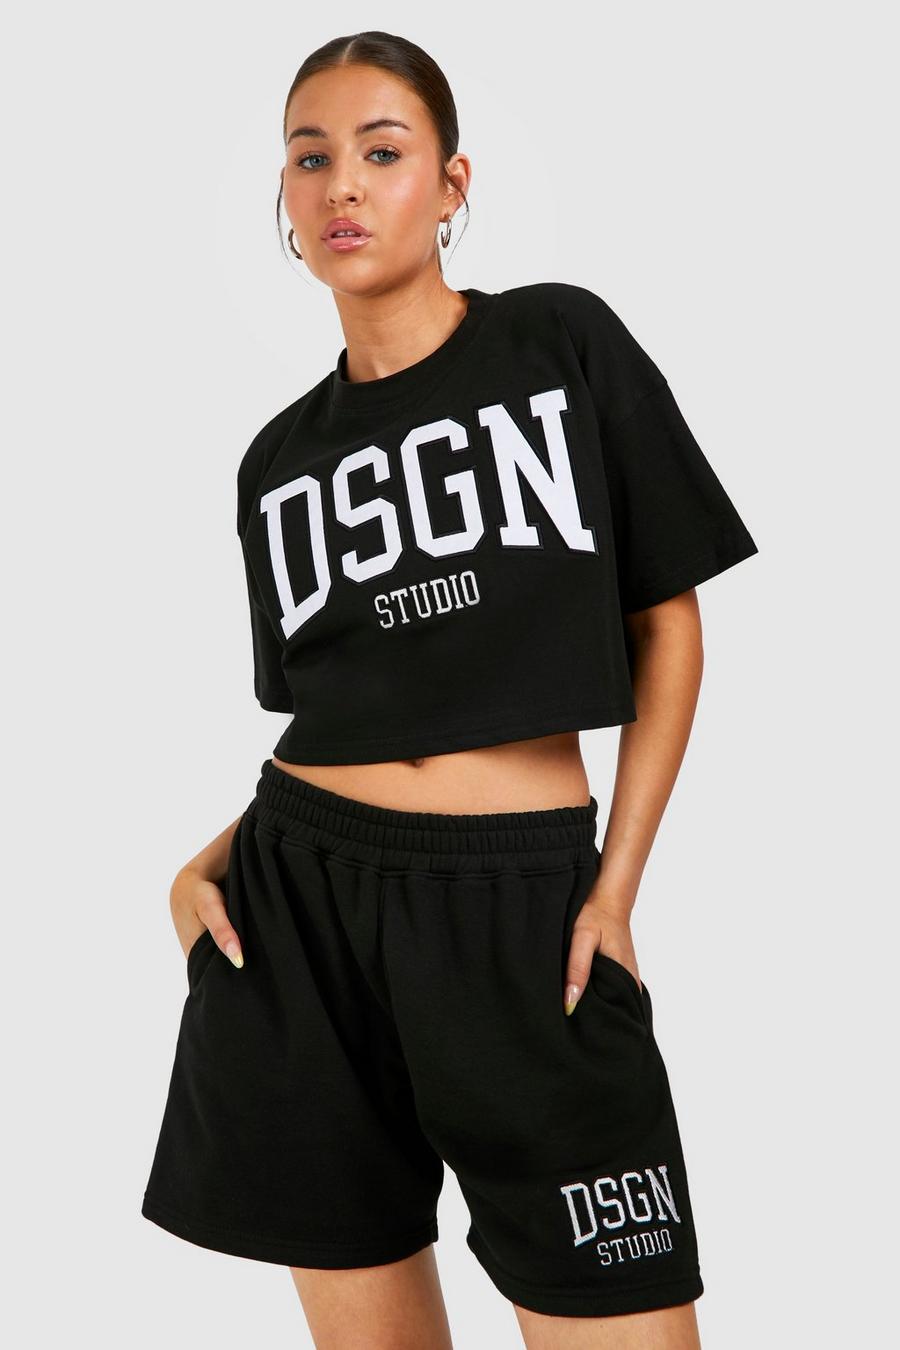 Kurzes T-Shirt mit Dsgn Studio Applikation und Shorts, Black